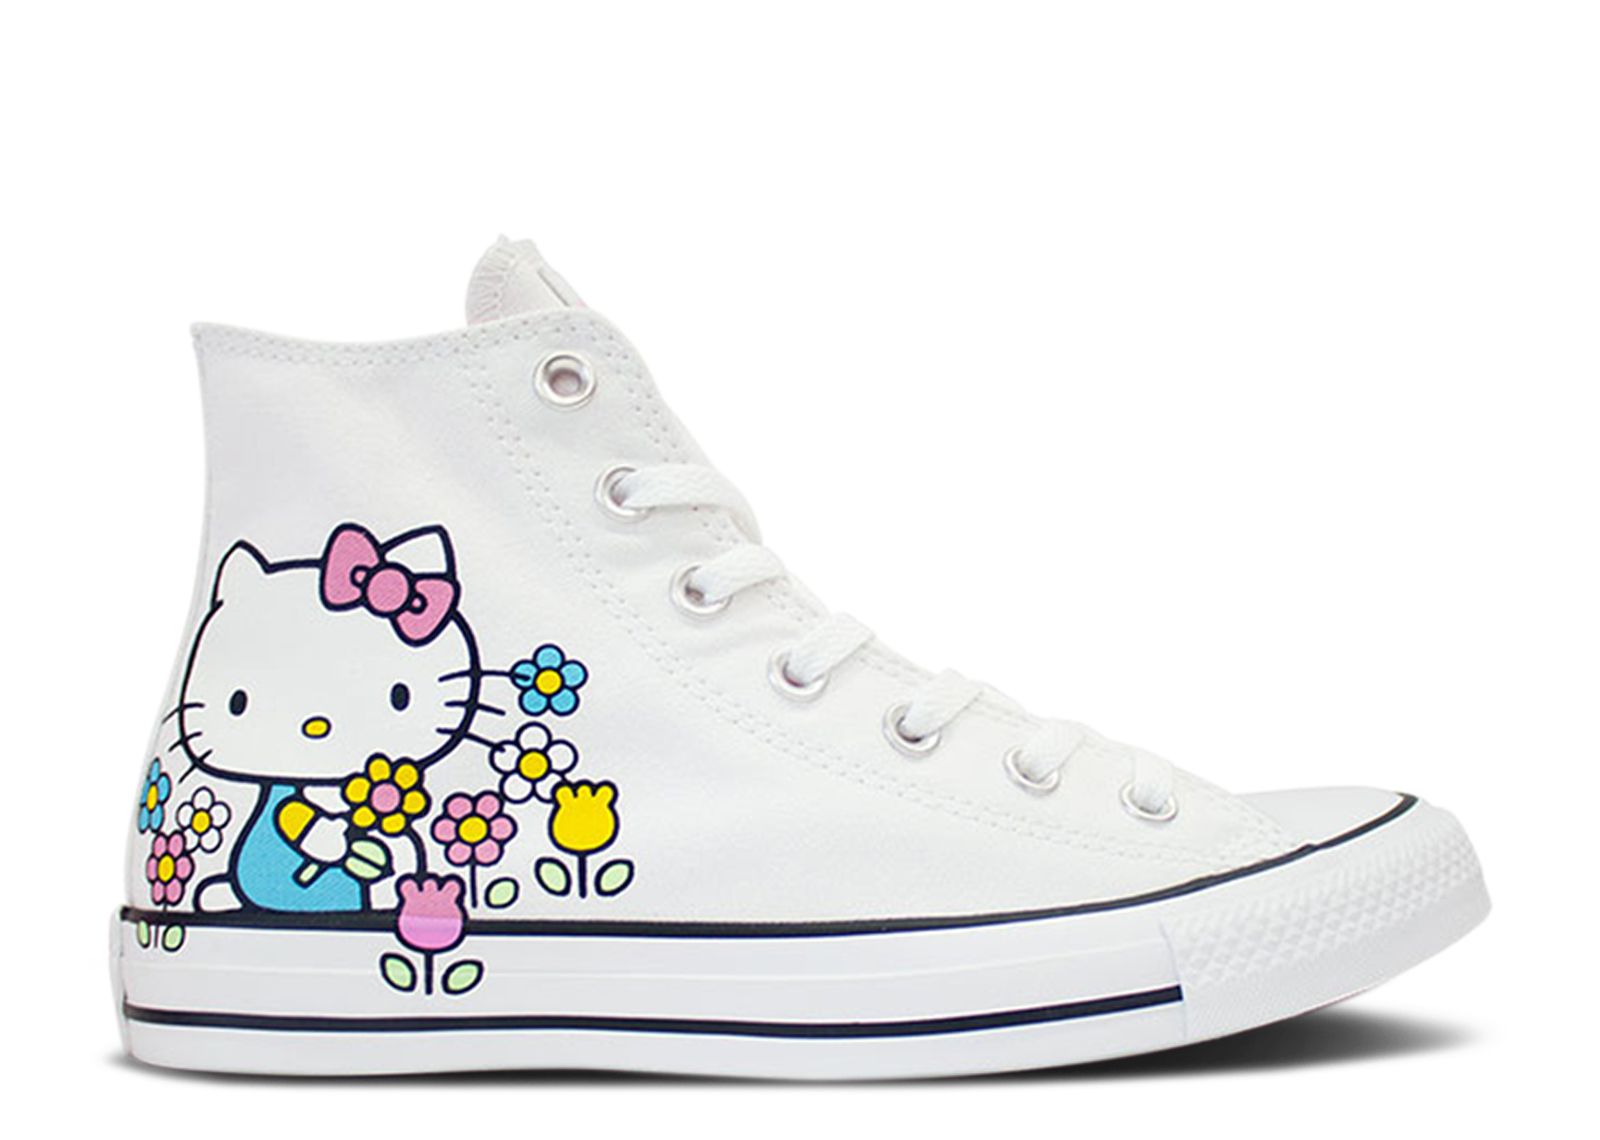 Wiegen 鍔 incompleet Hello Kitty X Chuck Taylor All Star High 'Flowers' - Converse - 164629C -  white/pink/white | Flight Club